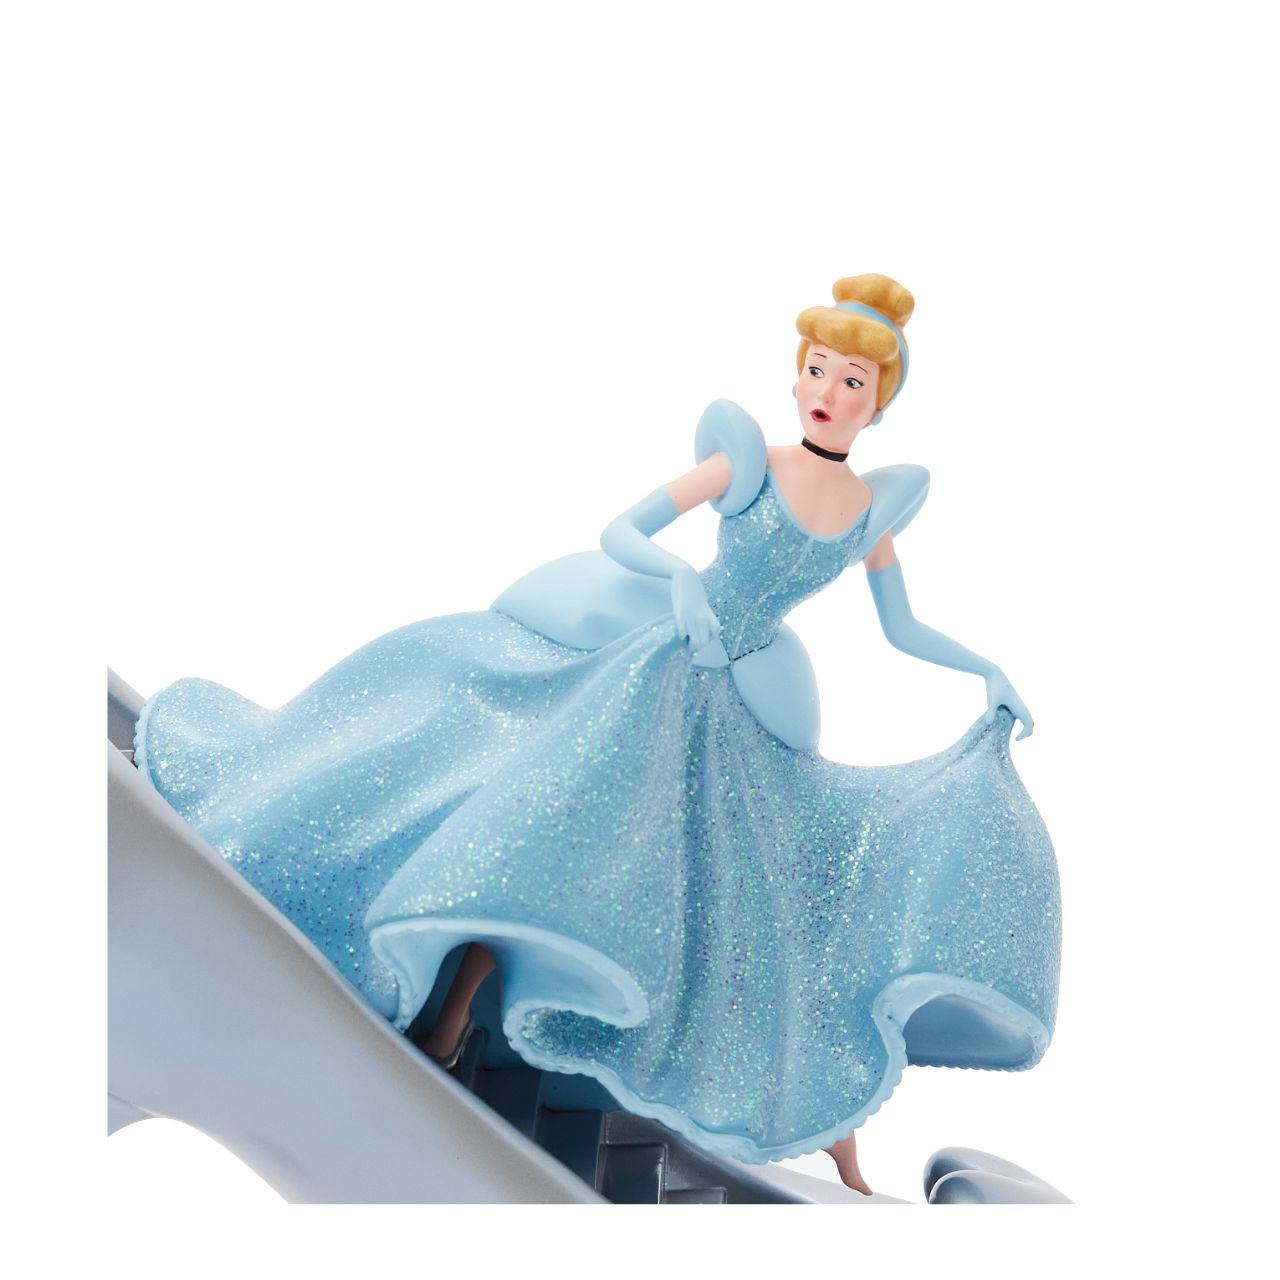 Disney 100th Anniversary Cinderella With Glass Slipper Decorative Figure  Mark the century milestone of Disney with this exquisite Disney Showcase Cinderella Icon Figurine. Celebrate the 100th anniversary of Disney with this wonderful Cinderella Figurine from Disney Showcase.